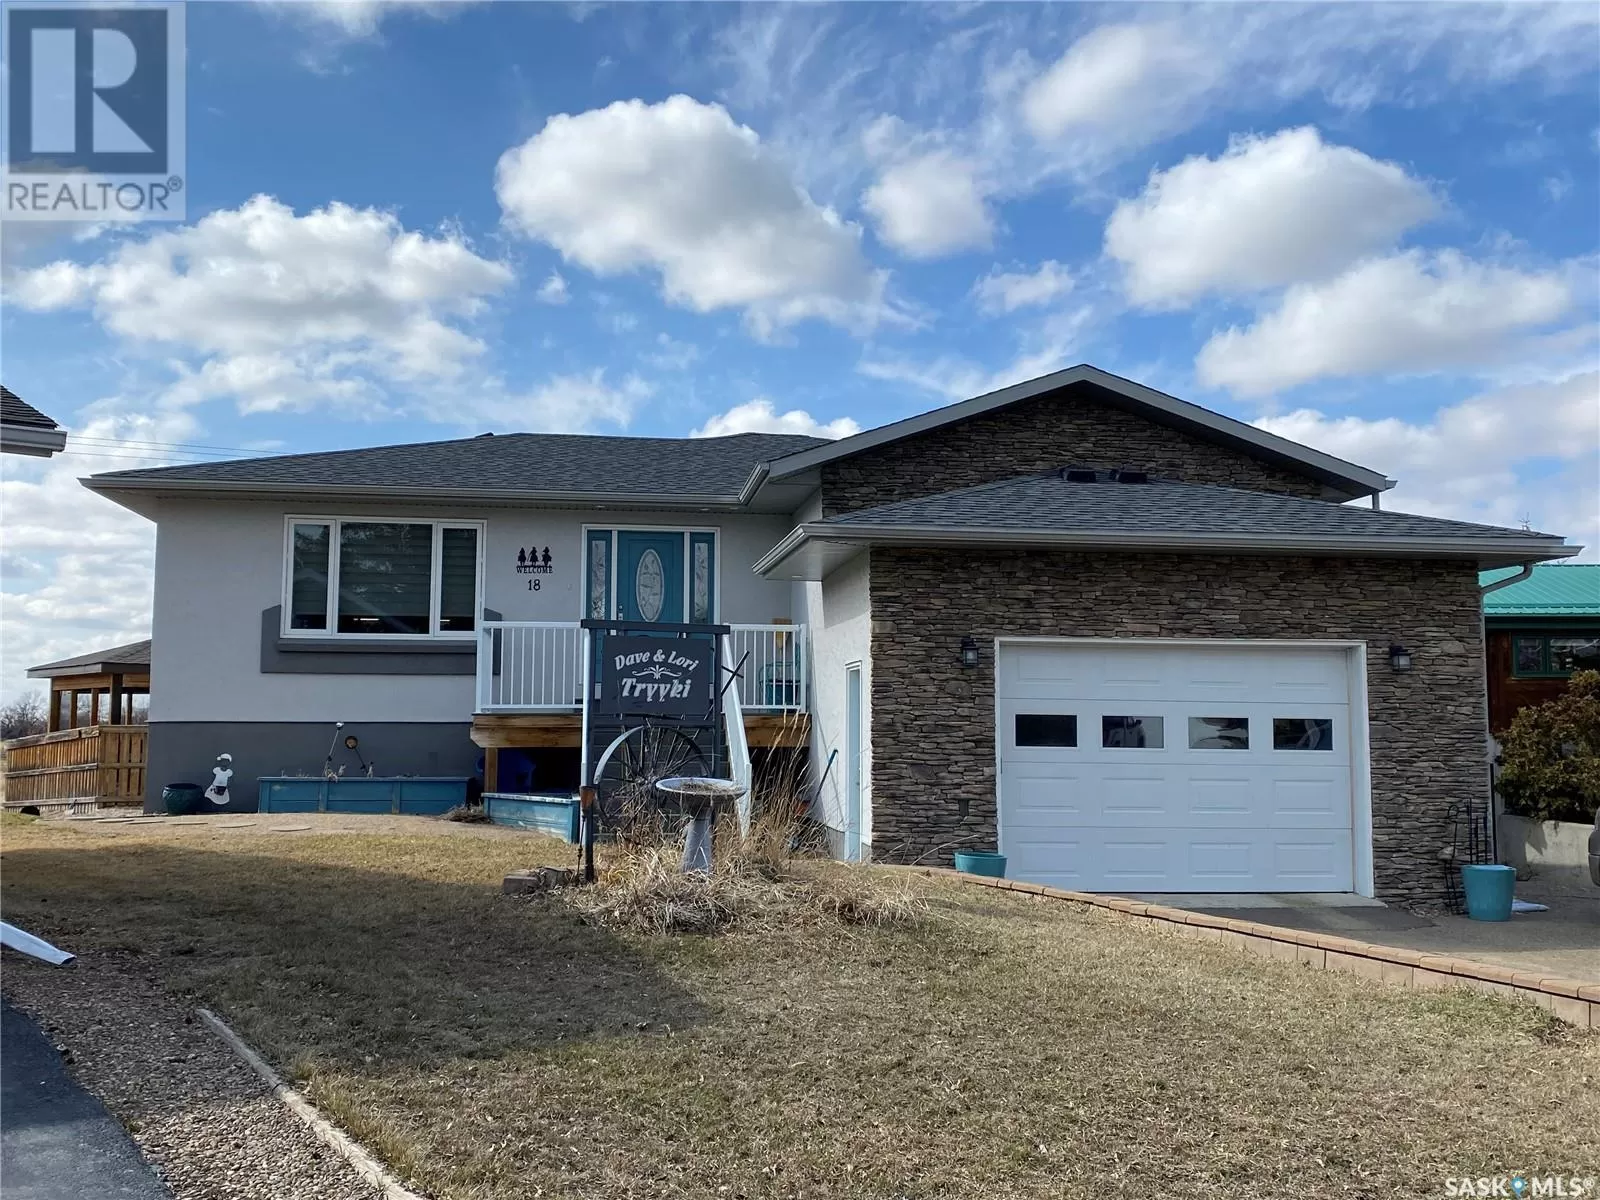 House for rent: 18 Chinook Place, Maple Creek, Saskatchewan S0N 1N0